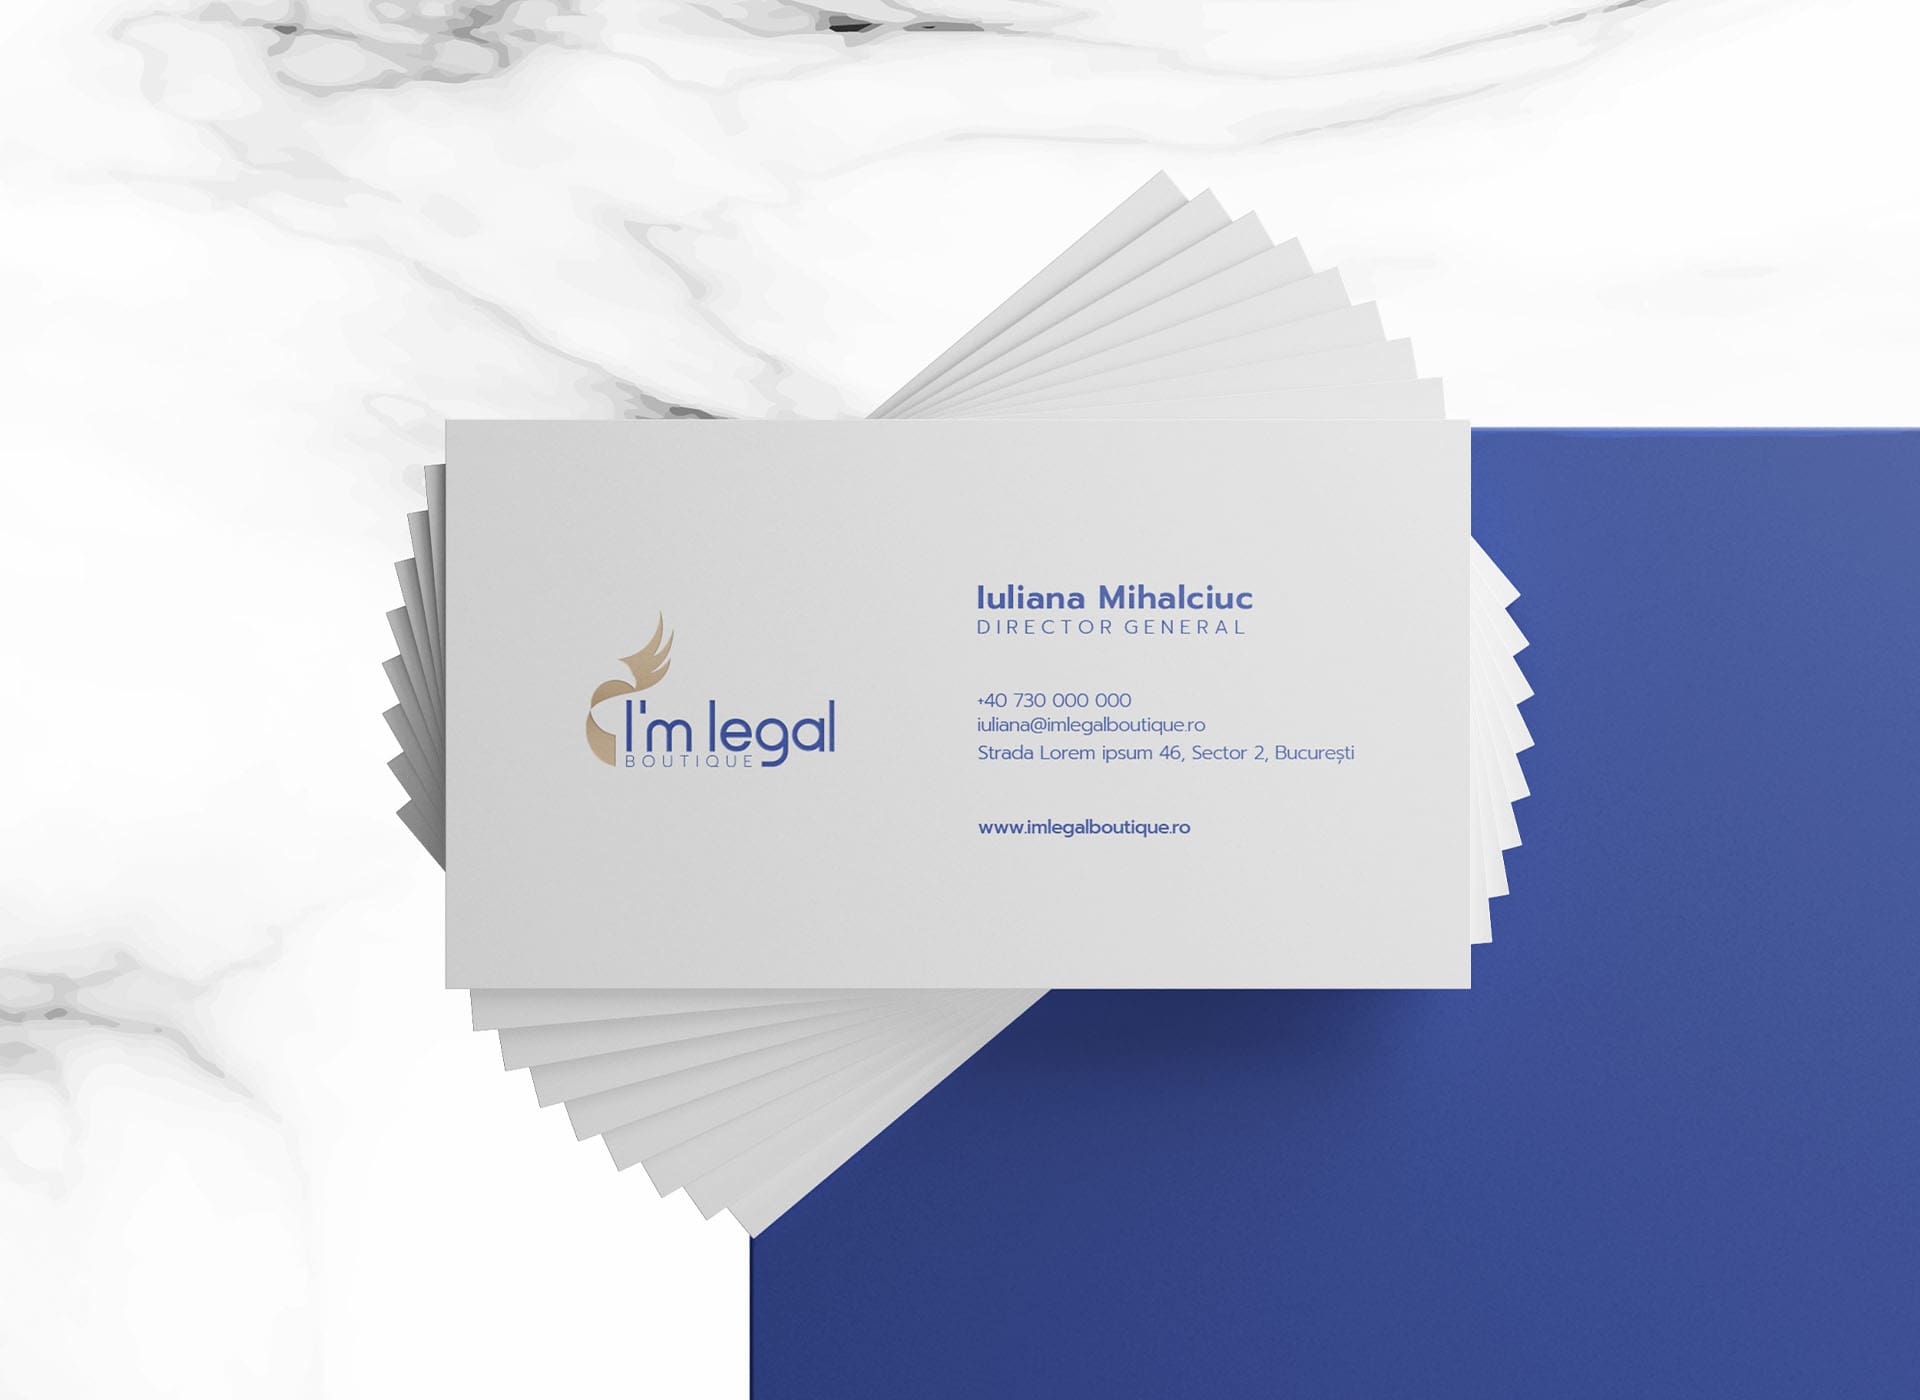 I'm legal portofoliu inoveo business card